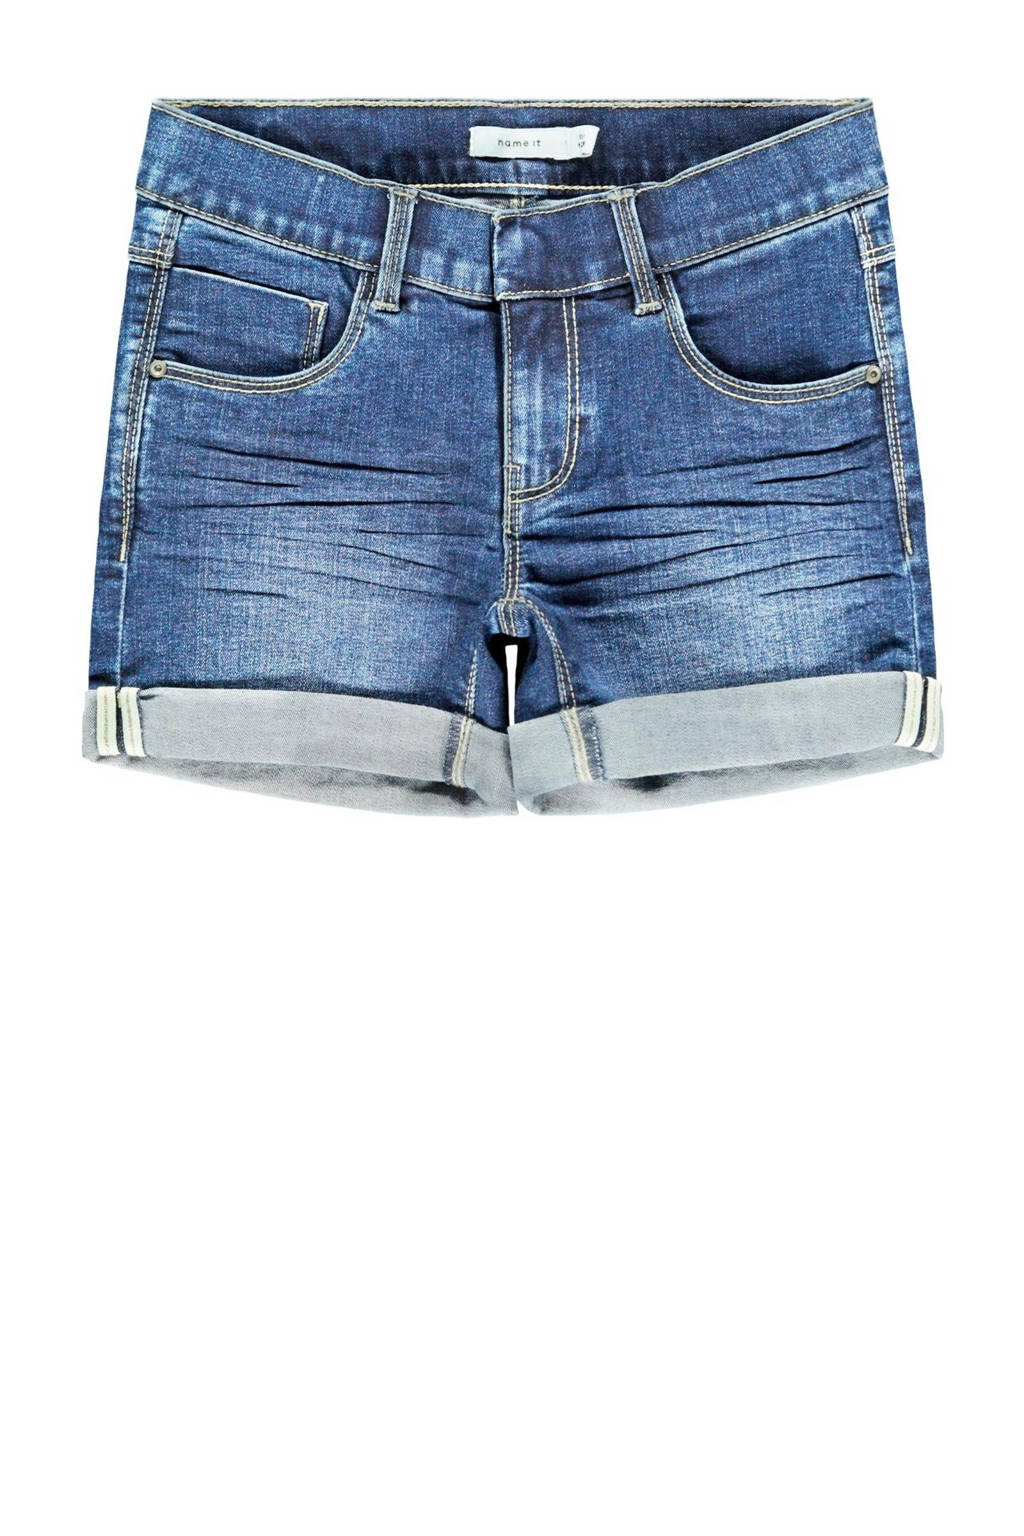 Stonewashed meisjes NAME IT KIDS jeans short Salli van duurzaam stretchdenim met regular waist en rits- en haaksluiting